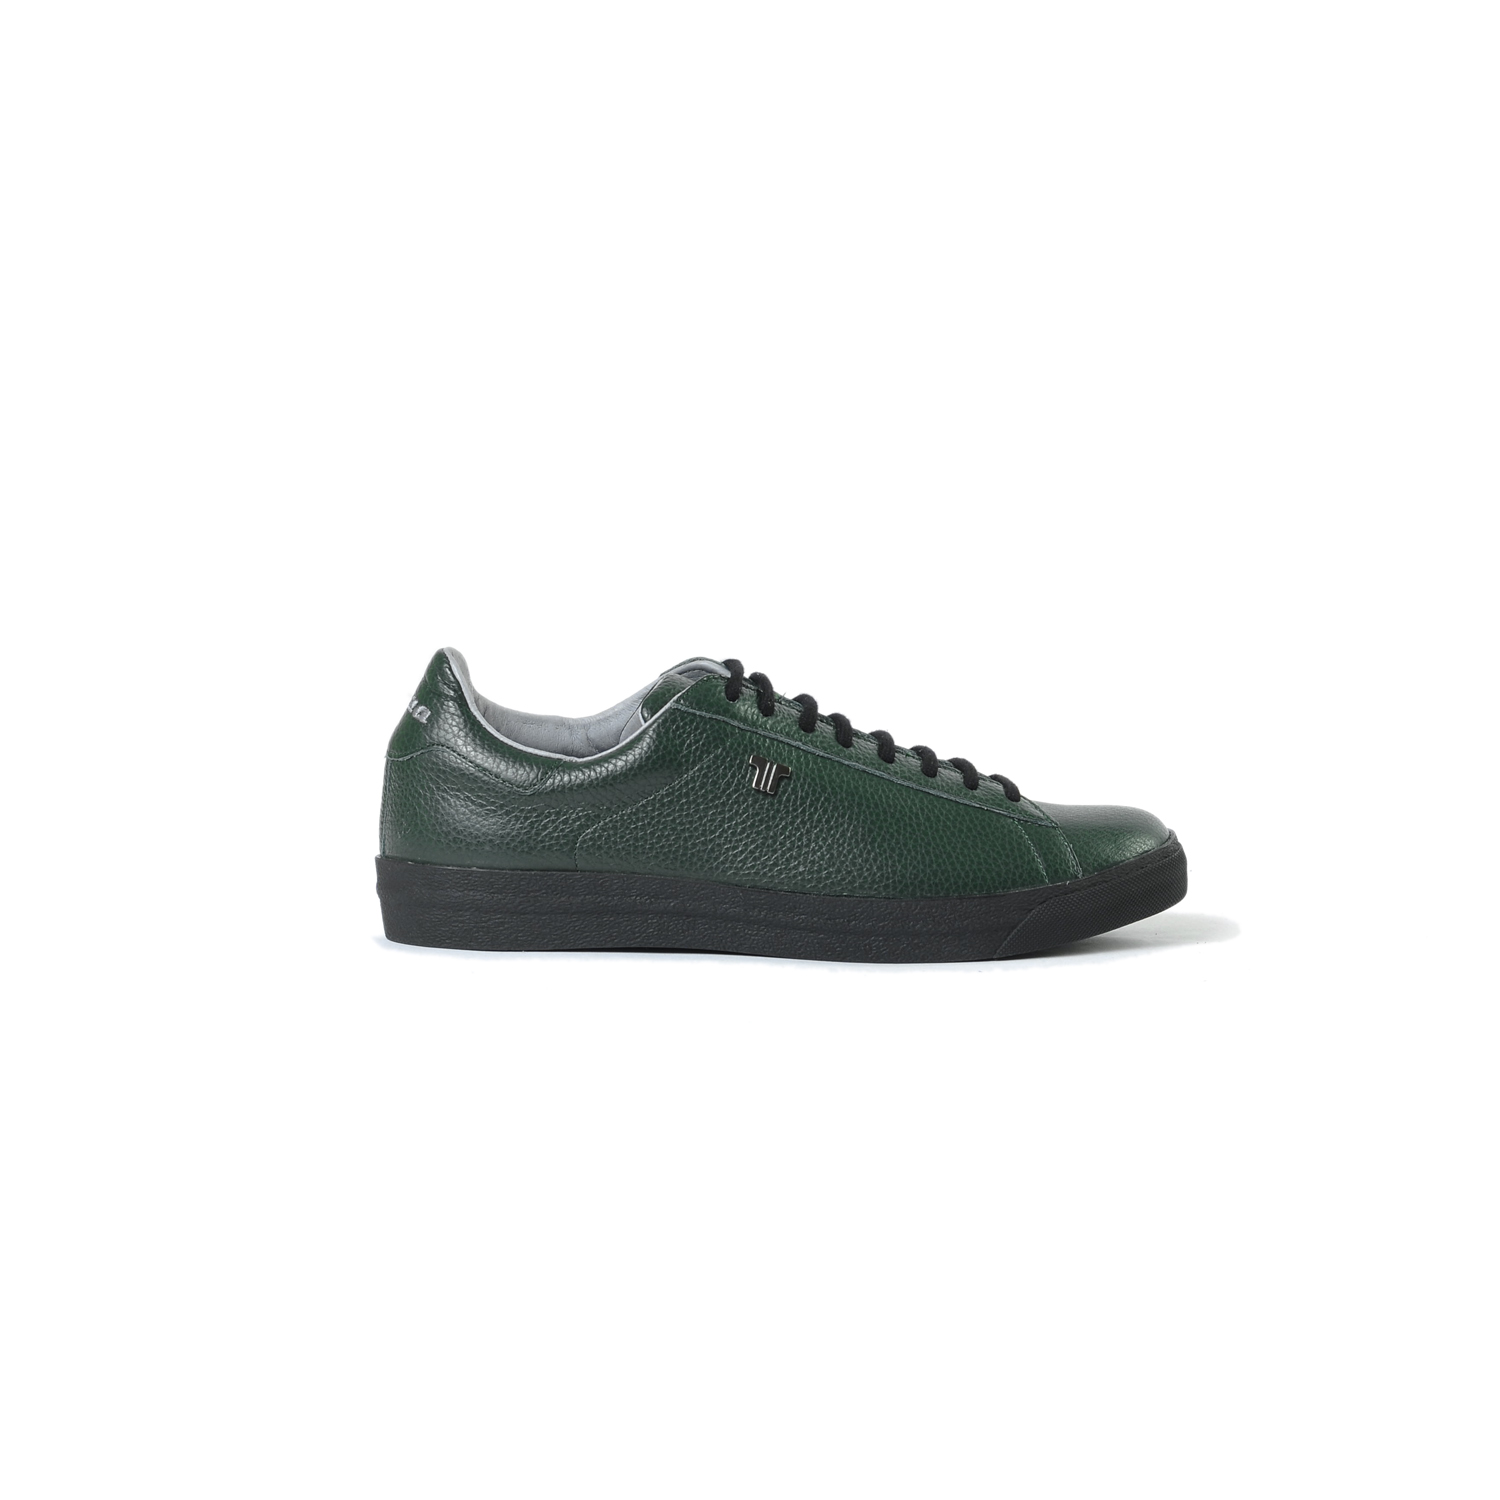 Tisza shoes - Simple - Dark green